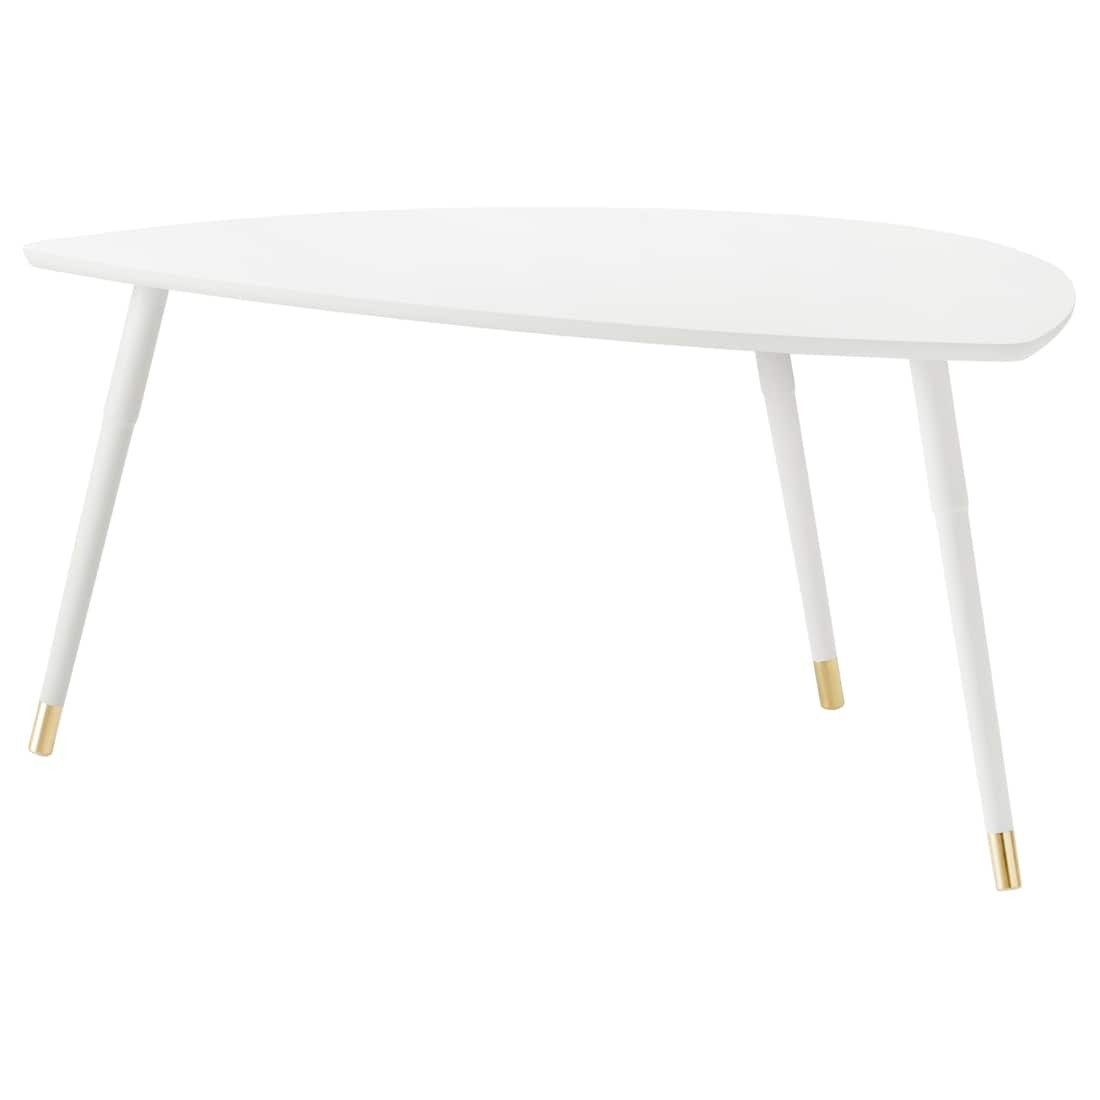 IKEA LÖVBACKEN ЛЁВБАККЕН Журнальный стол, белый, 106x55x52 cм 10282848 102.828.48